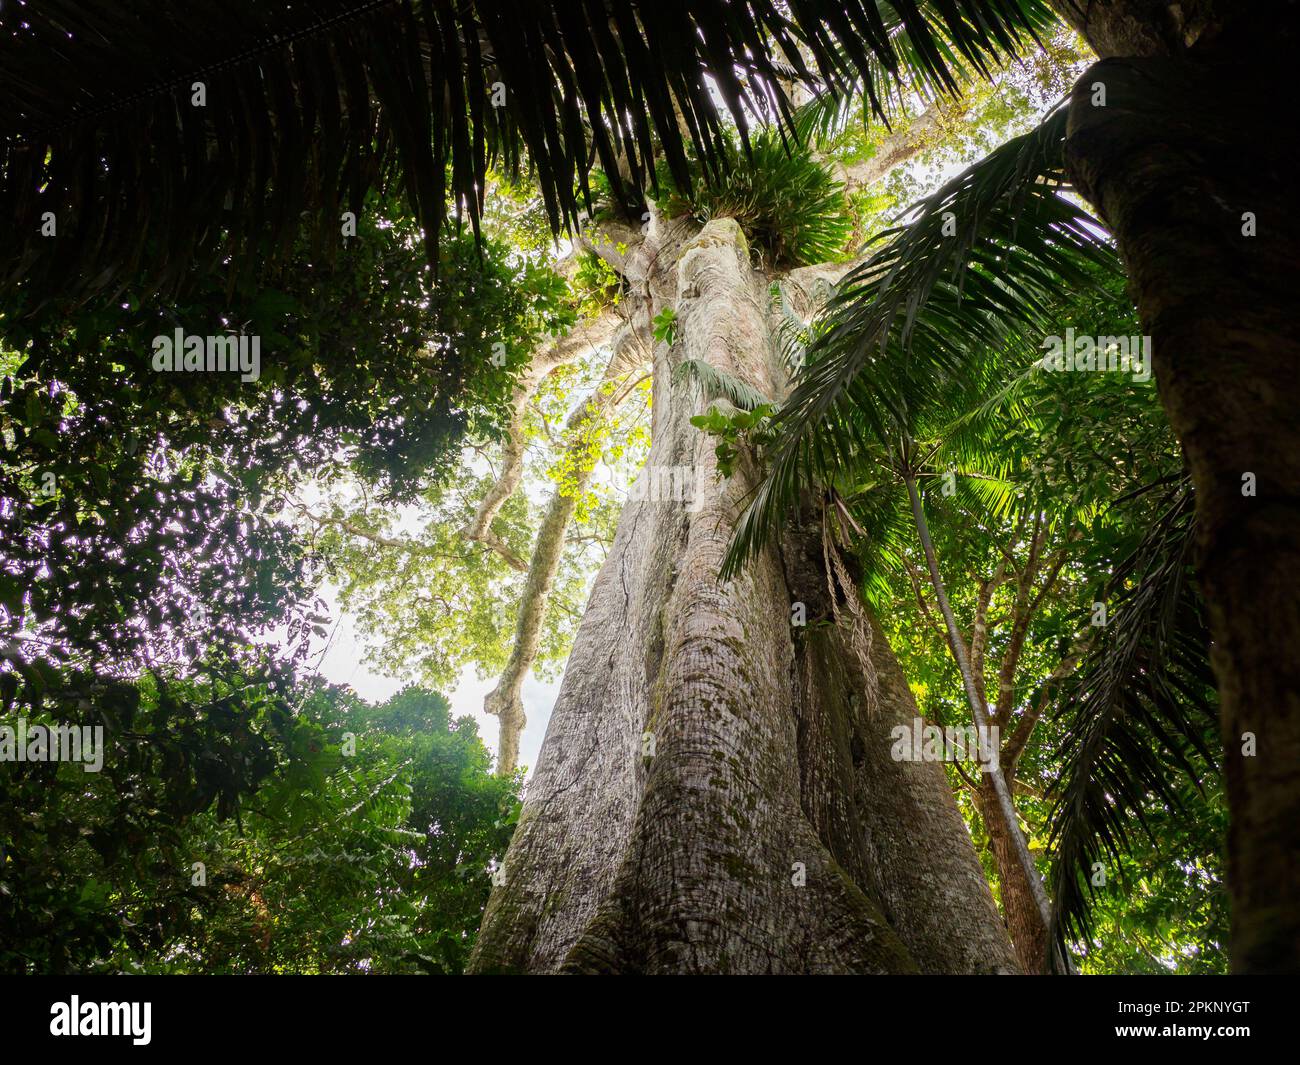 Big ceiba, kapok tree on the bank of the Javari River. Ceiba pentandra. Amazonia, border of Brazilia and Peru, South America Stock Photo